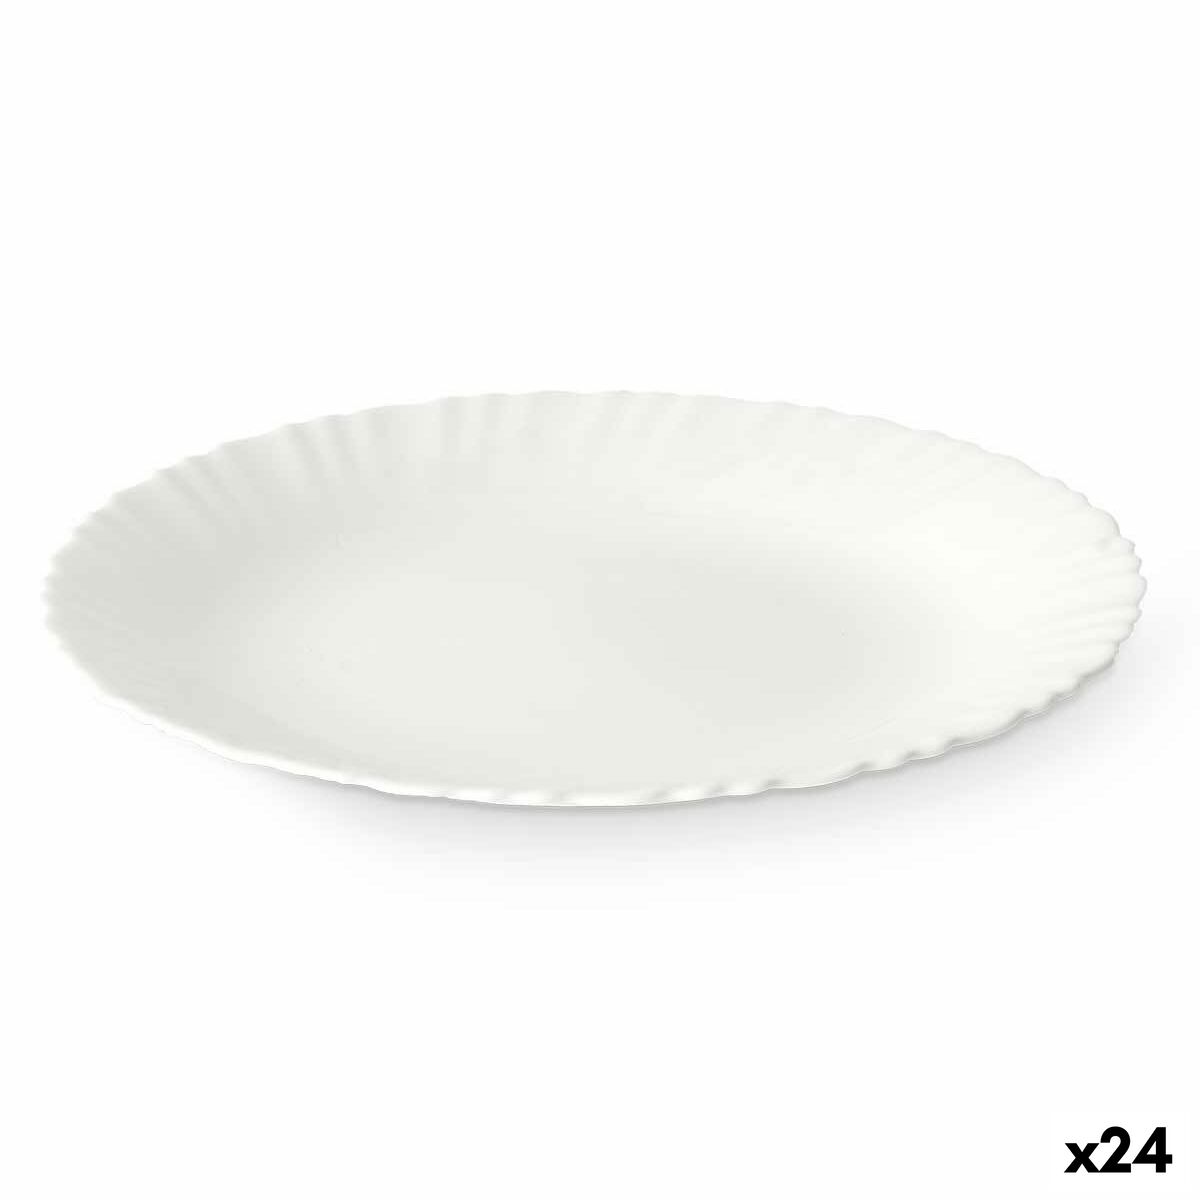 Piatto da pranzo Bianco 24 x 2 x 24 cm (24 Unità)